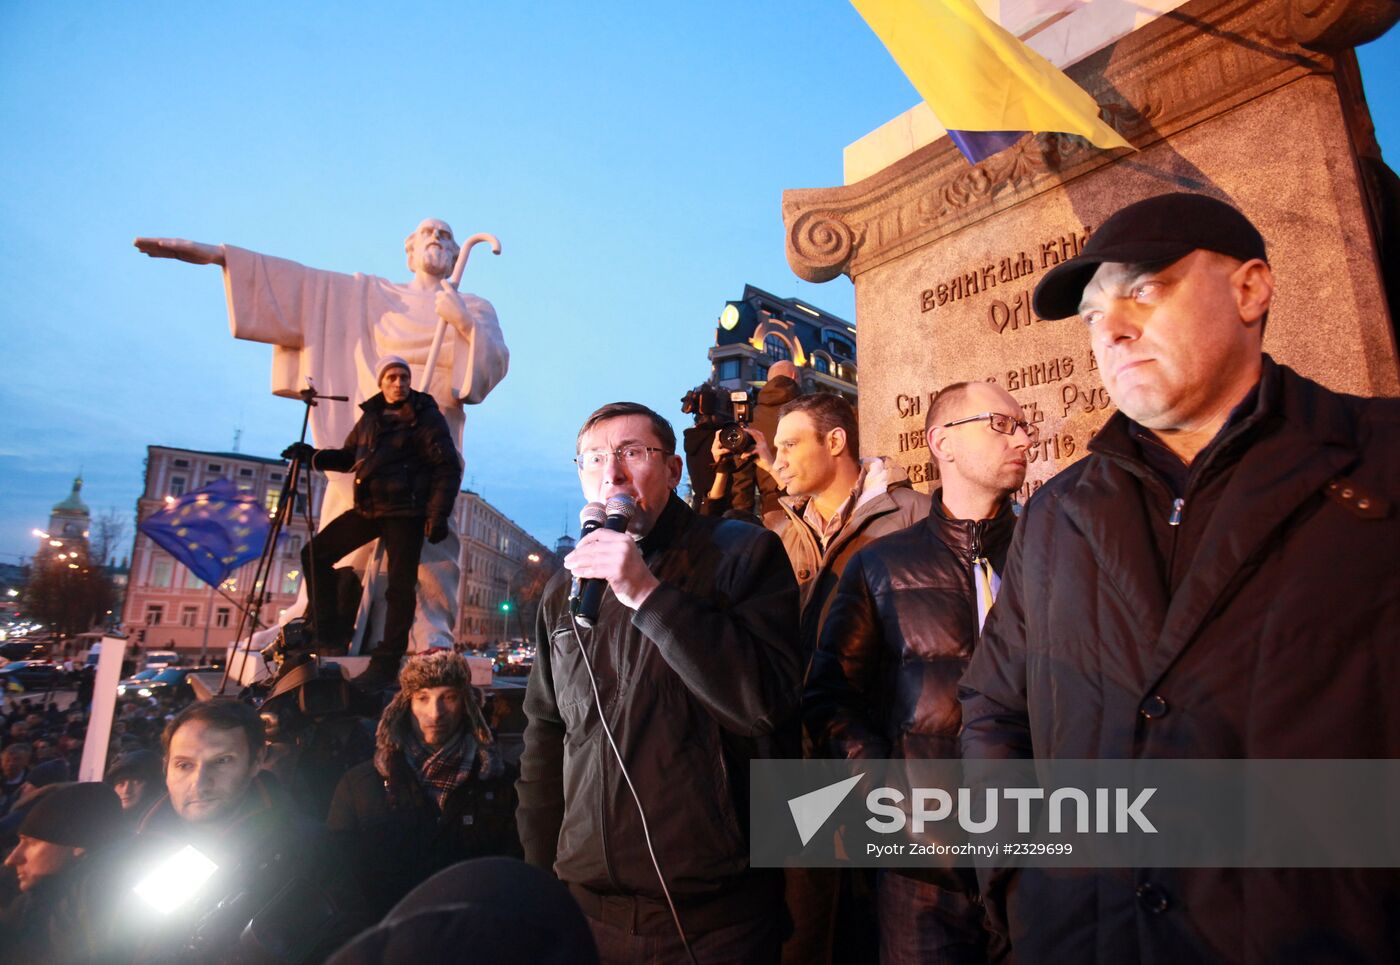 Civil disorders continue in Kiev